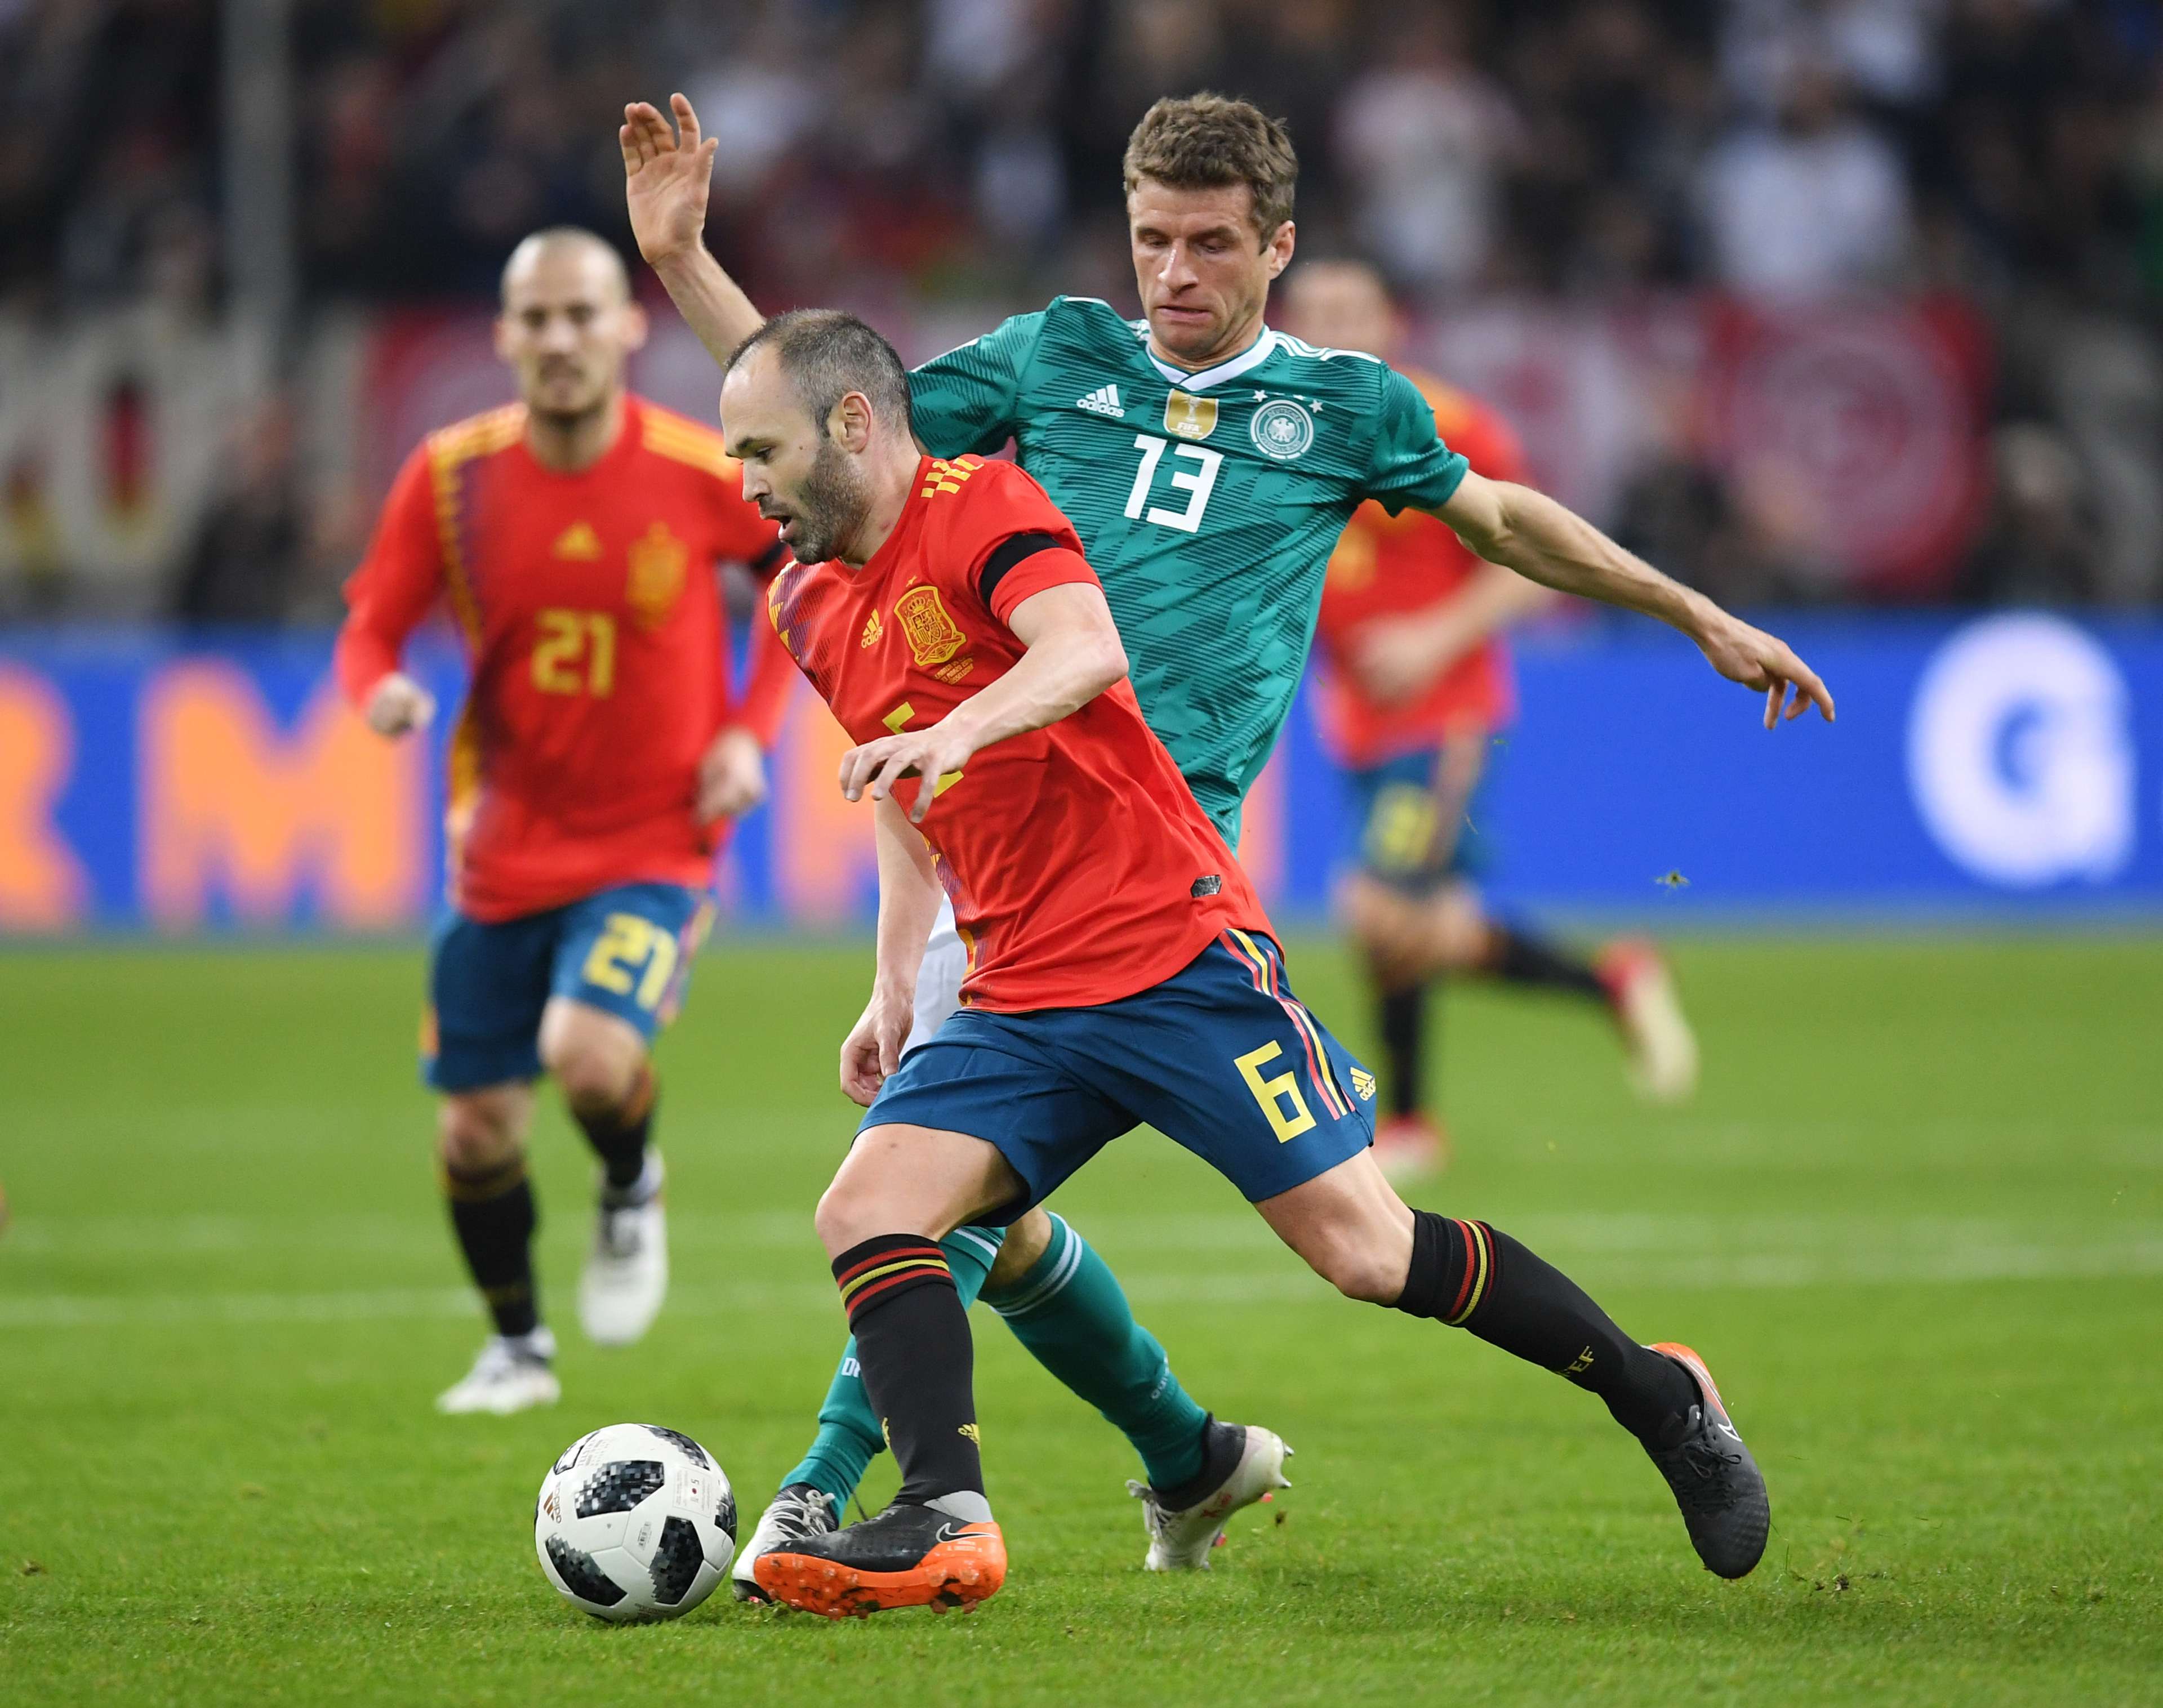 Andres Iniesta for Spain against Germany